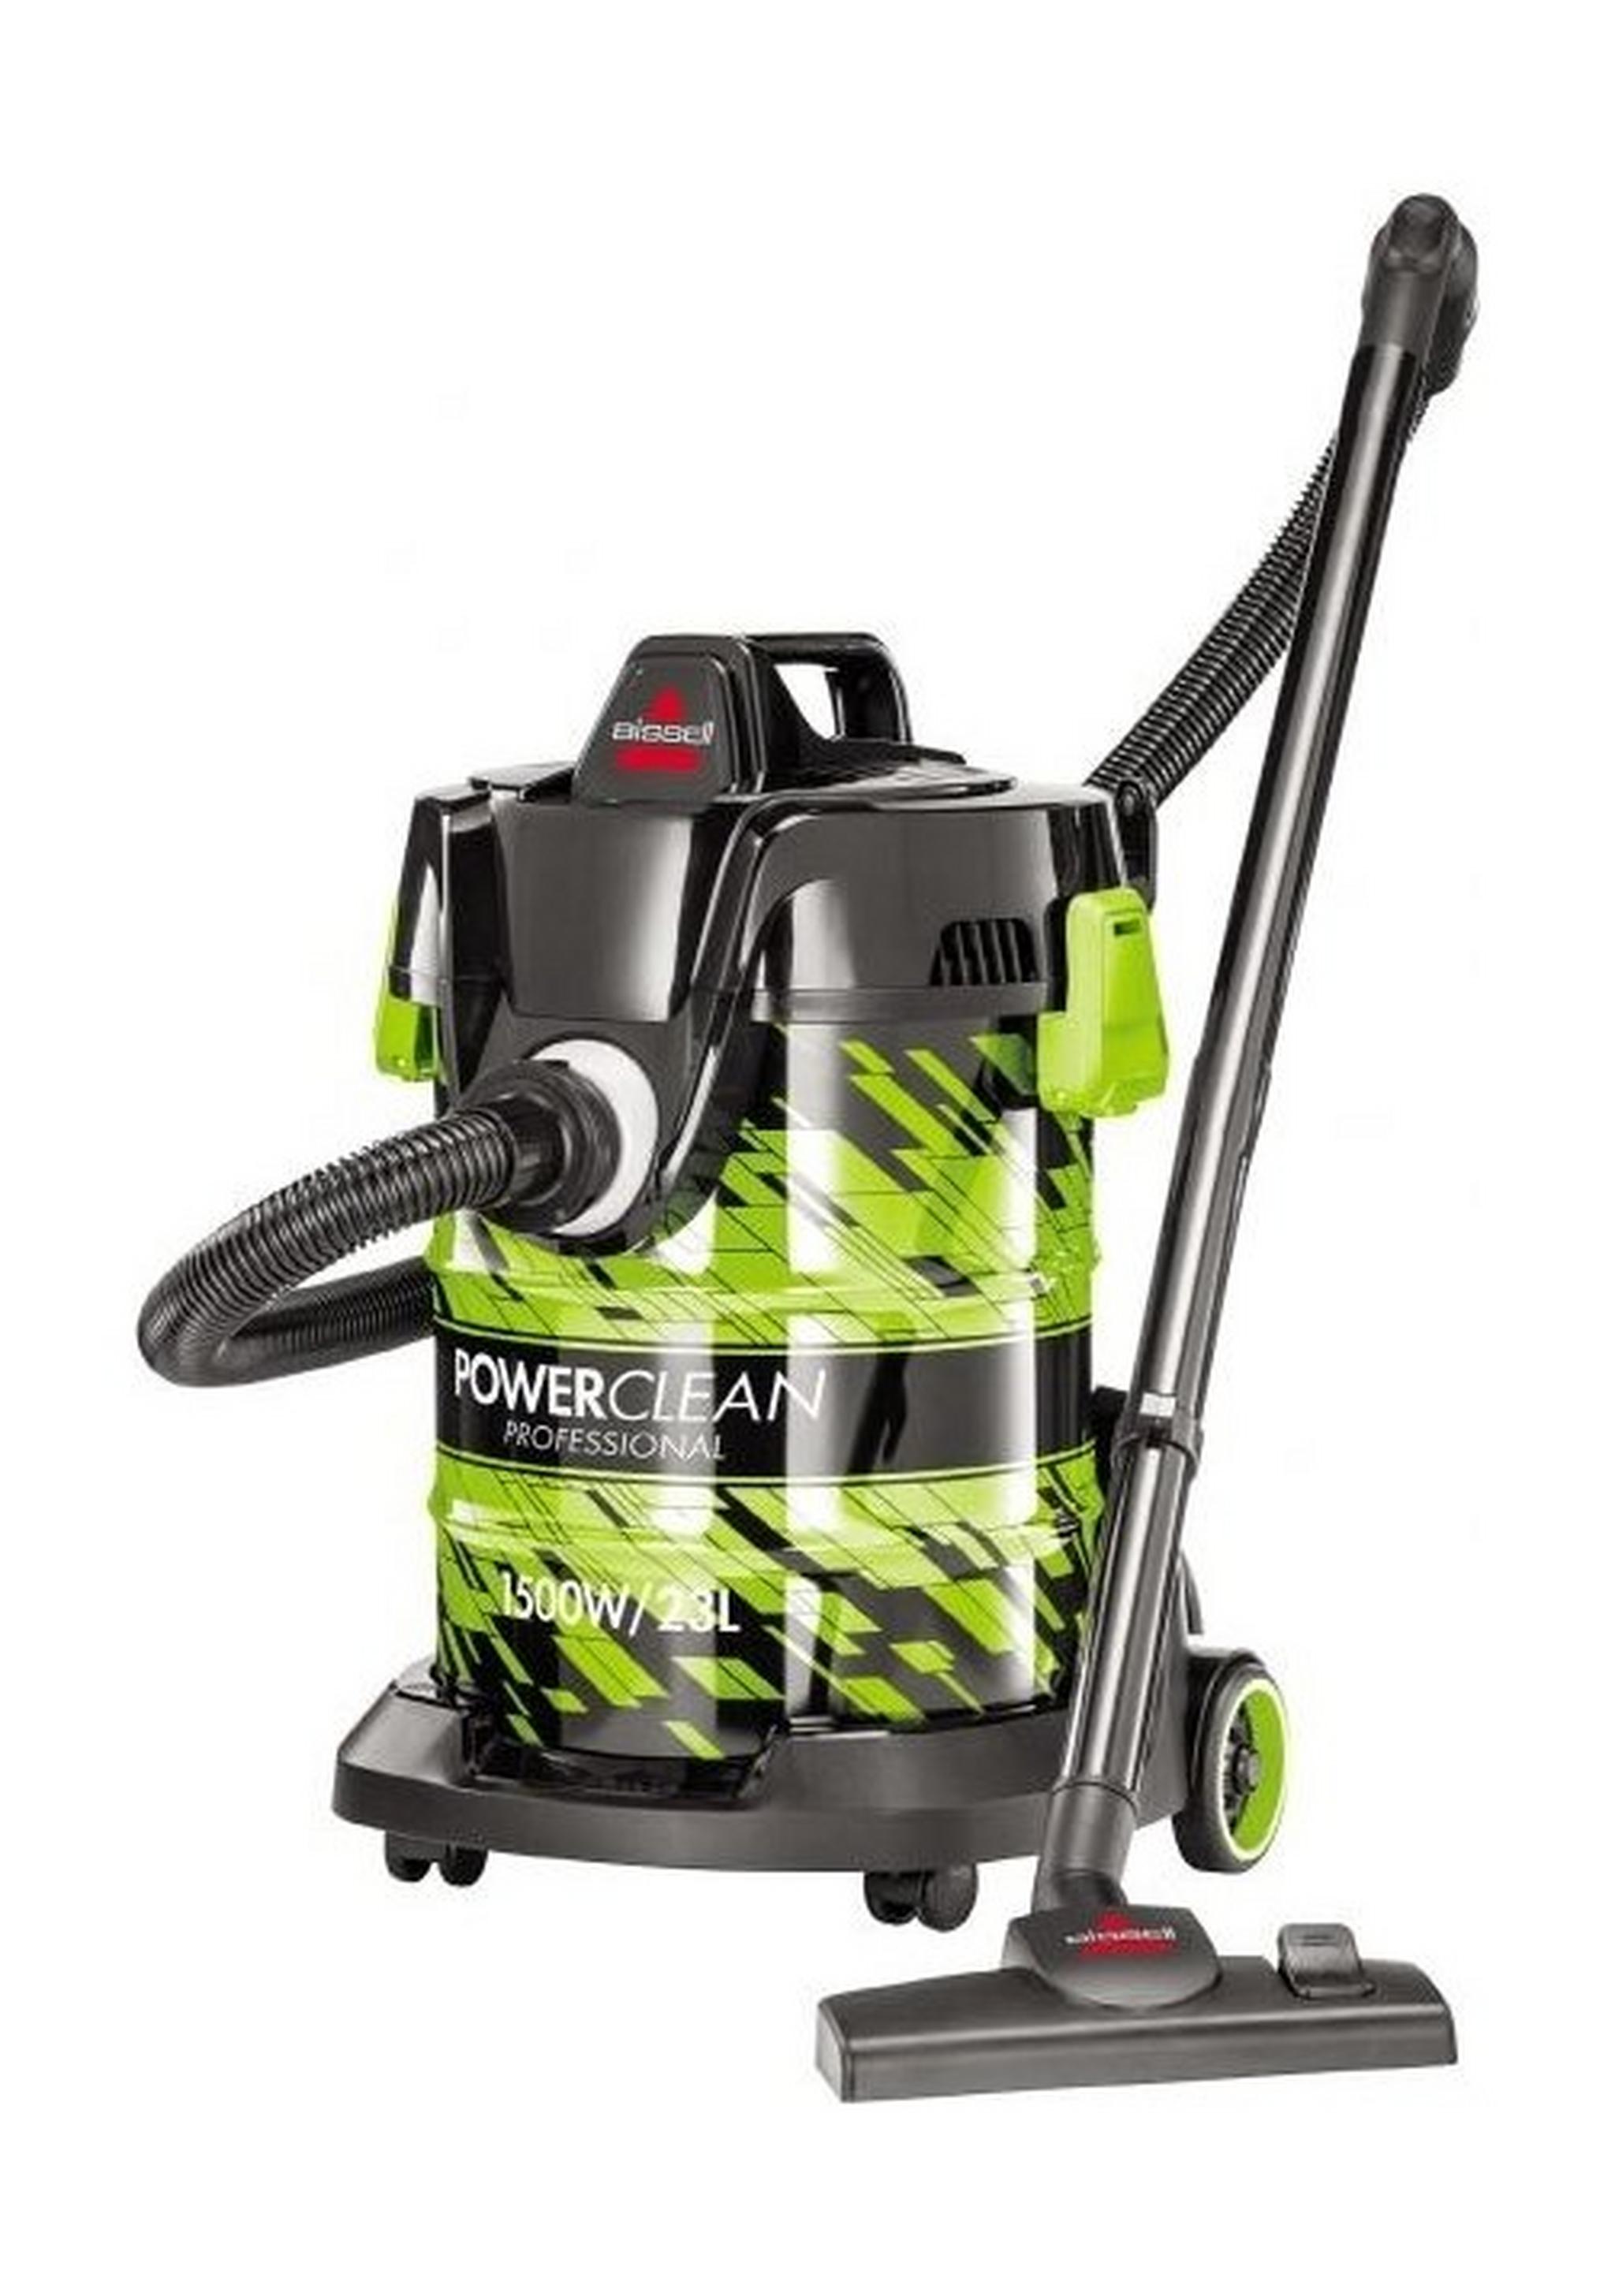 Bissell premium powerclean 23 liter wet & dry vacuum cleaner (20261) - Green